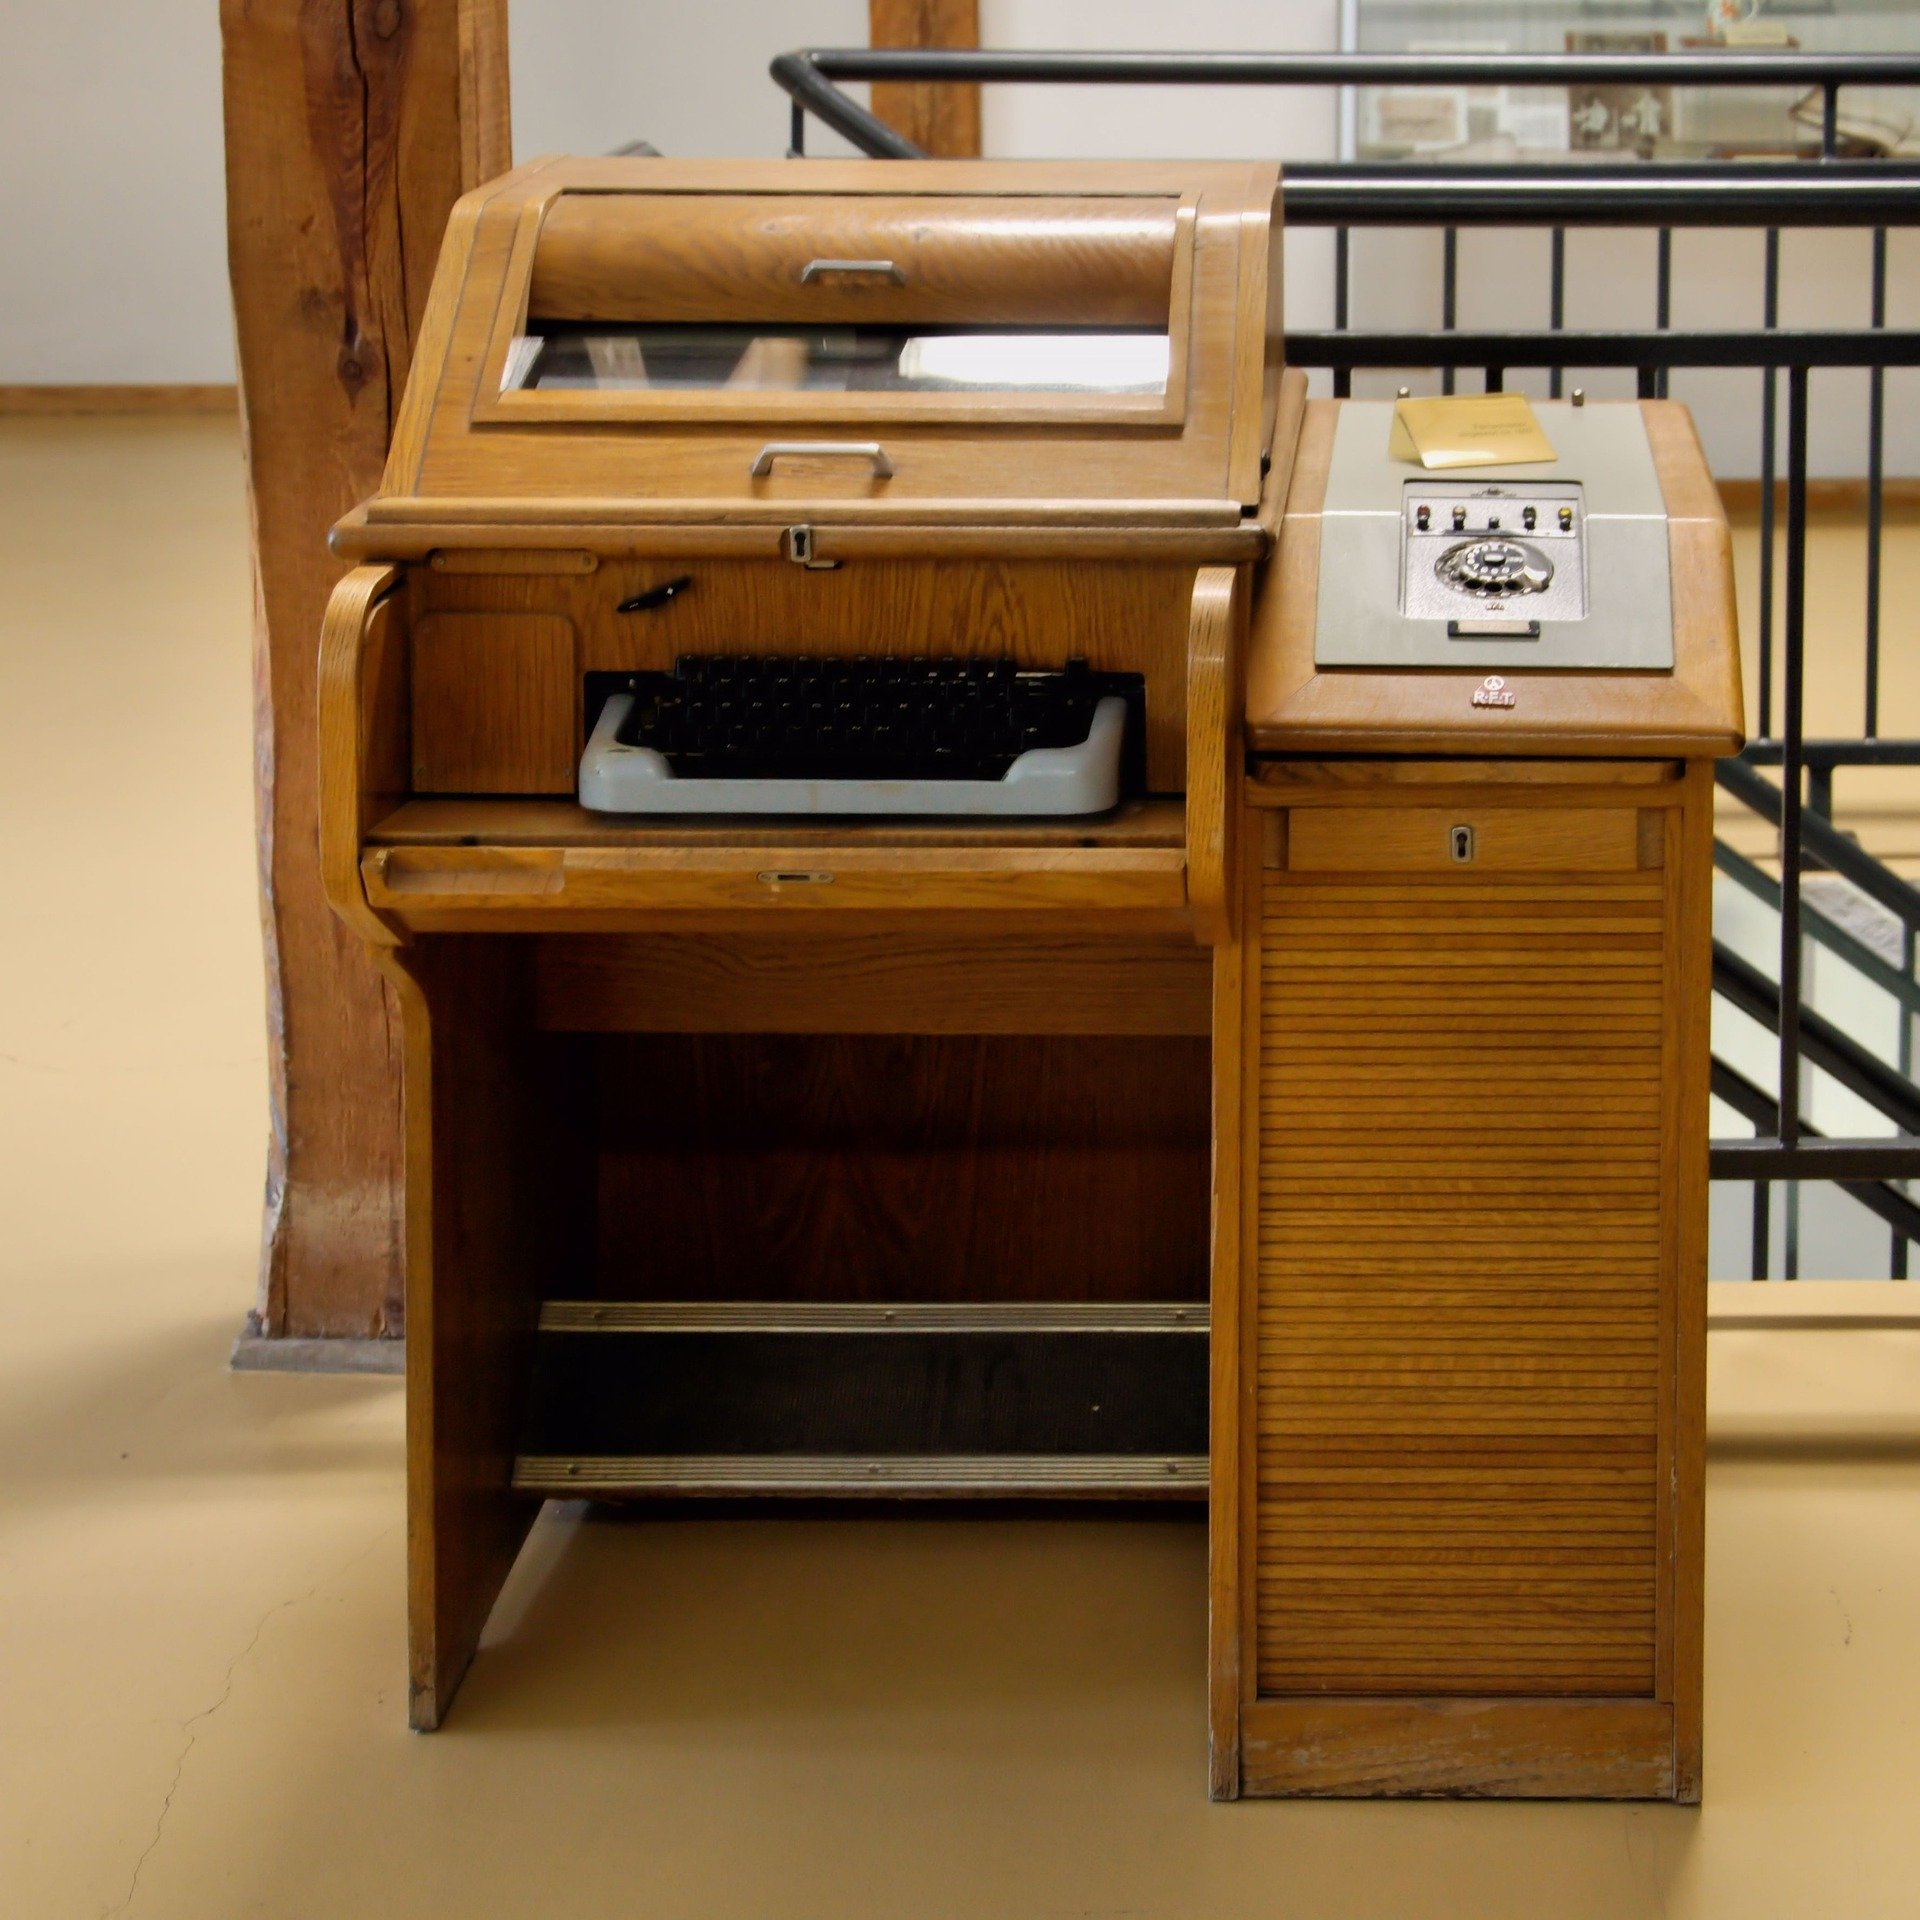 An old telegraph machine. | Source: Pixabay